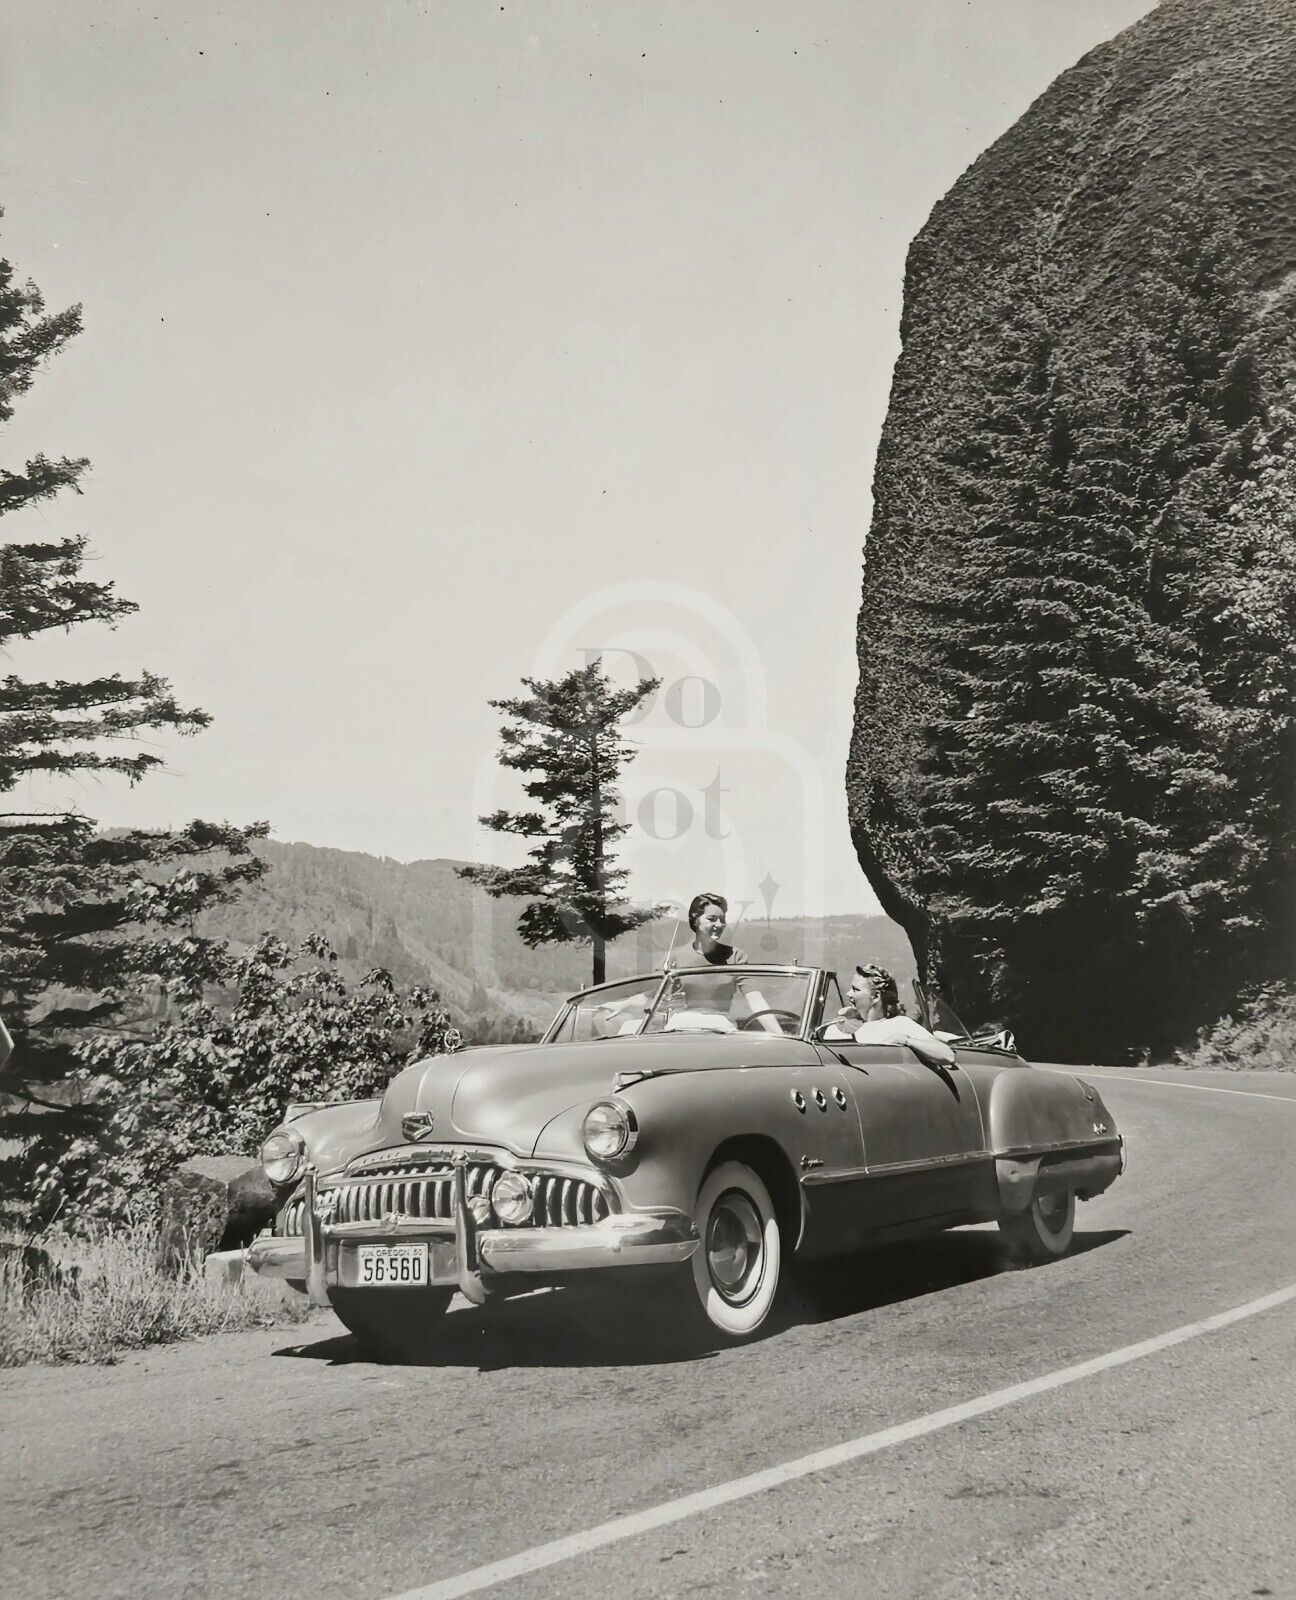 Incredible Photo, Models In Car. Columbia River Highway, Oregon. C. 1950 Ackroyd